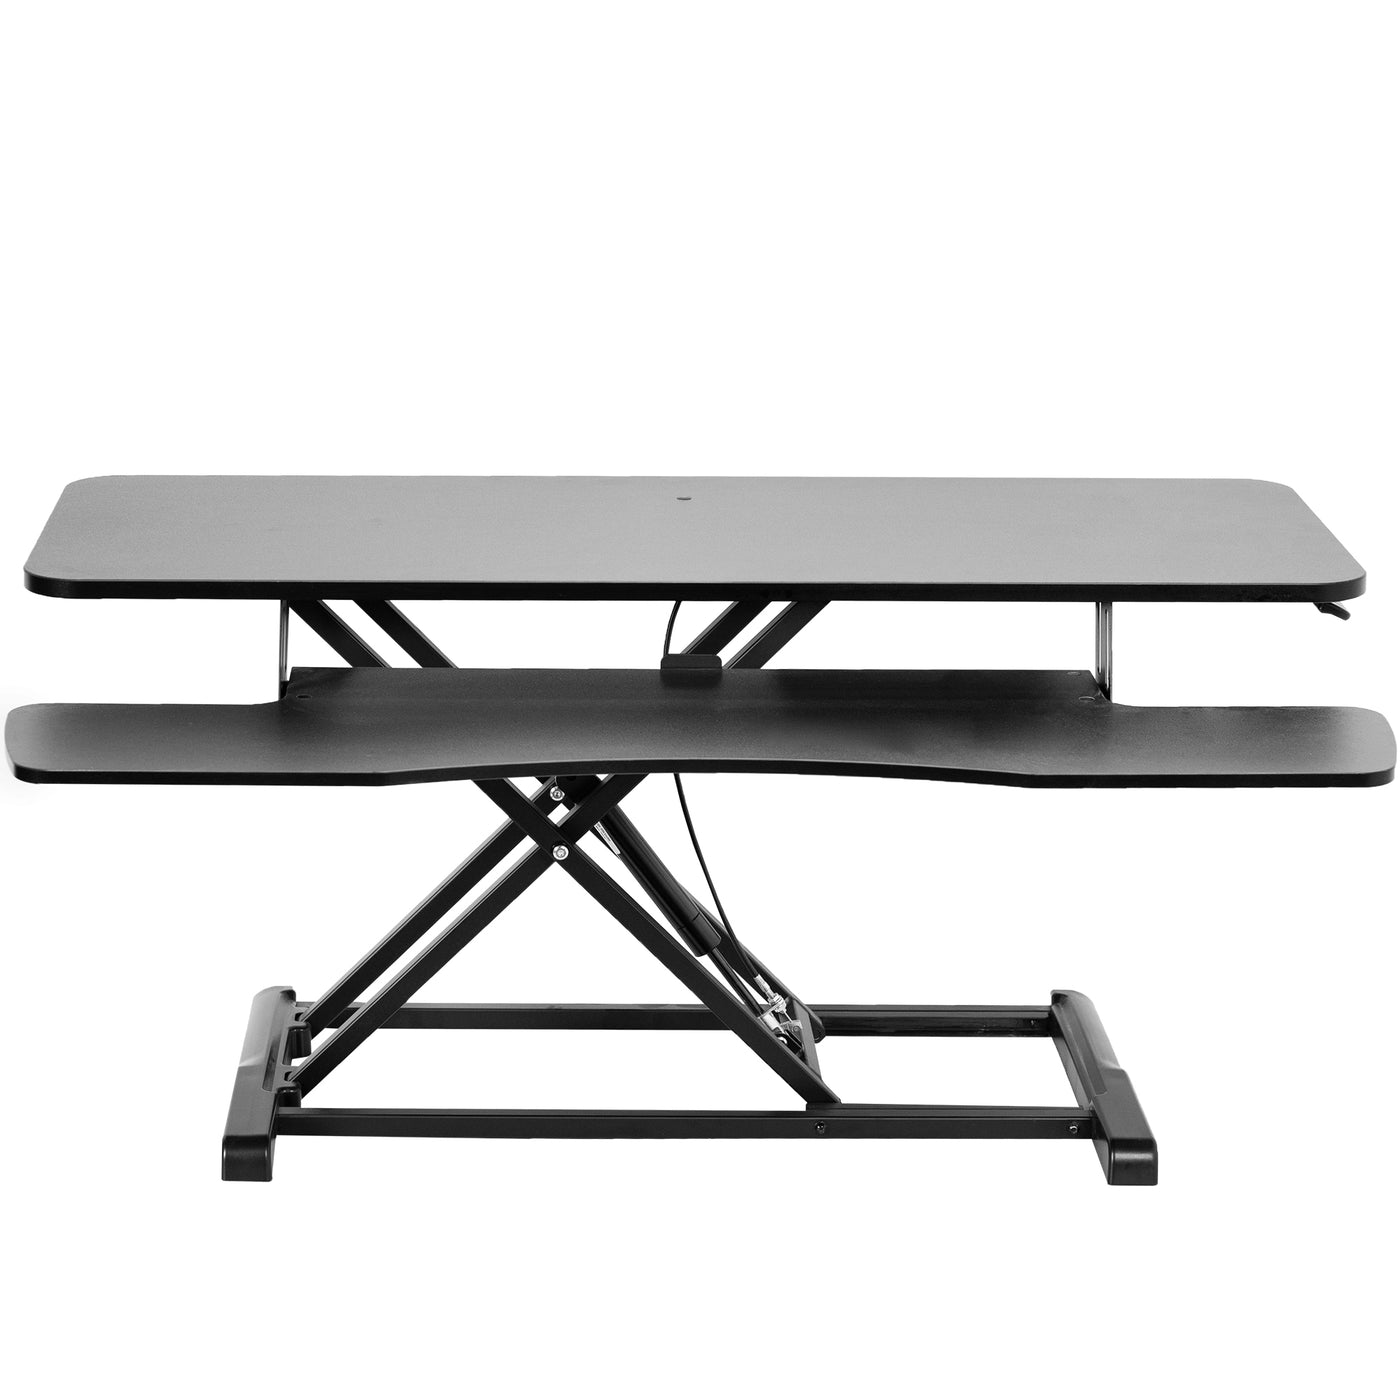 Small Ergo Height Adjustable Standing Desk Converter White - True